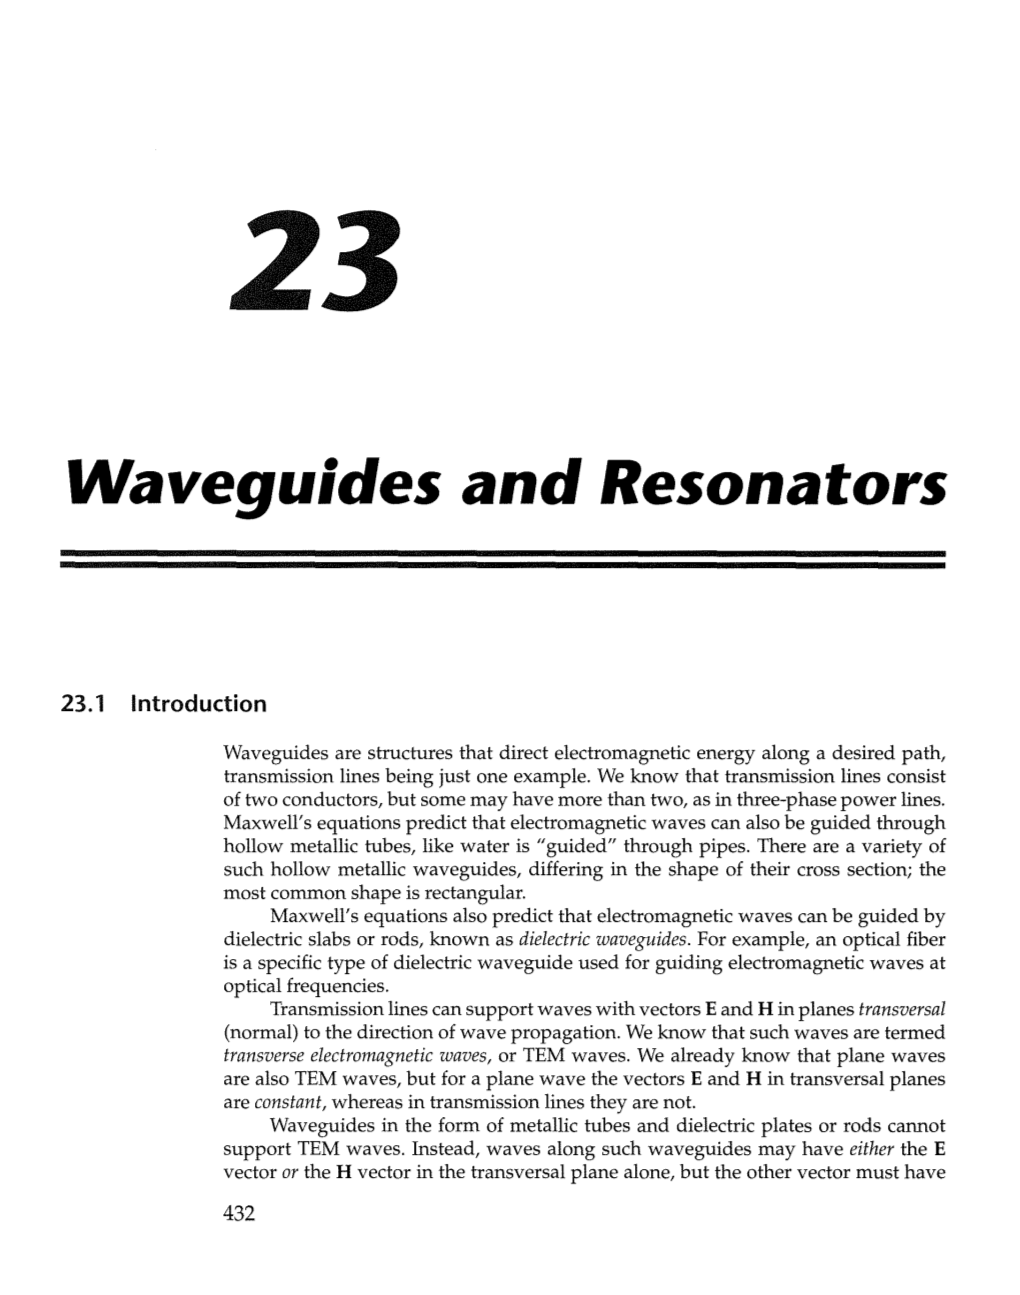 Waveguides and Resonators